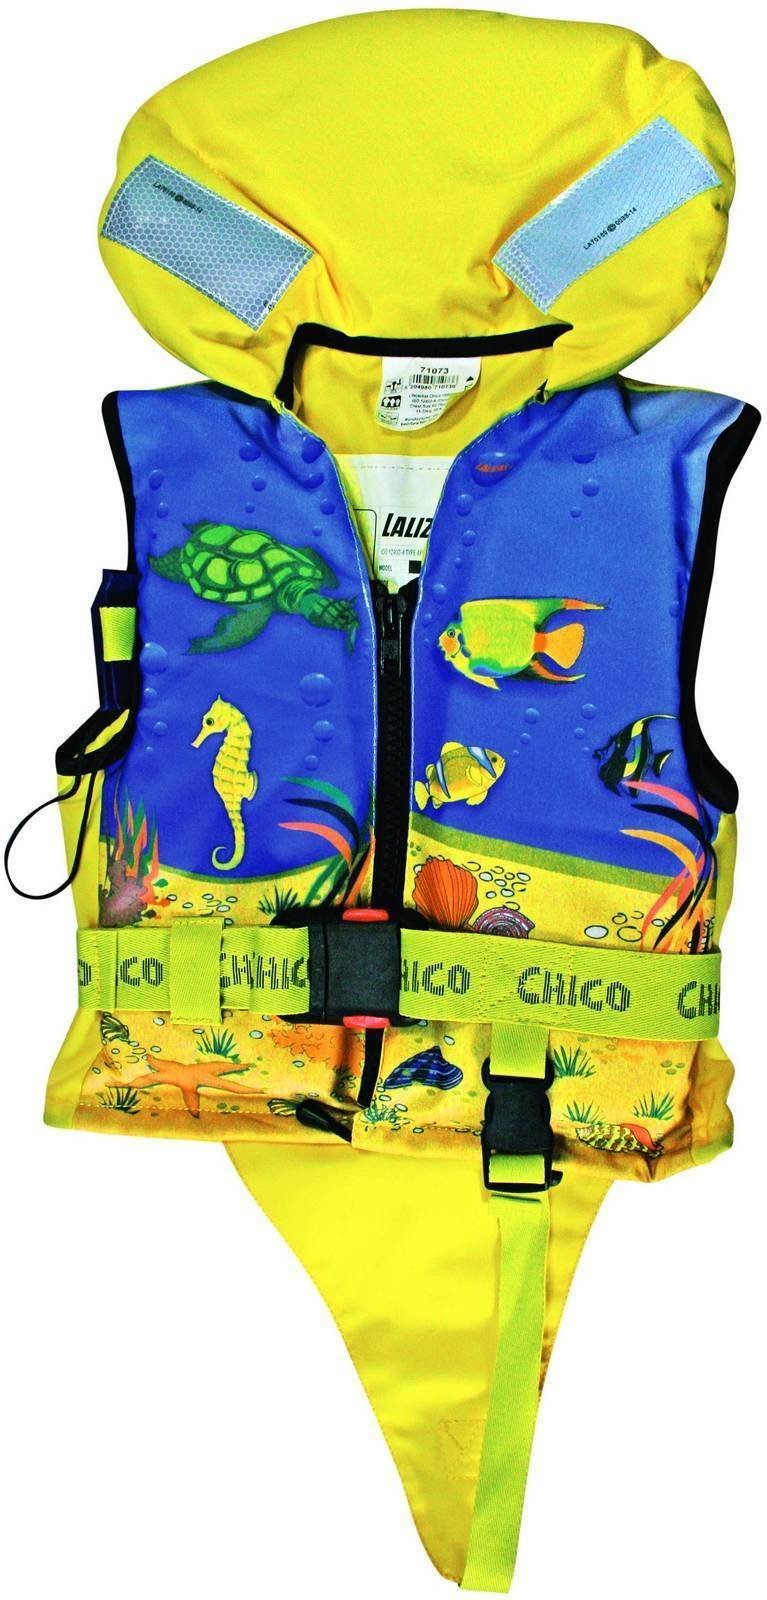 Kamizelka ratunkowa Lalizas Chico Lifejacket 10-20kg